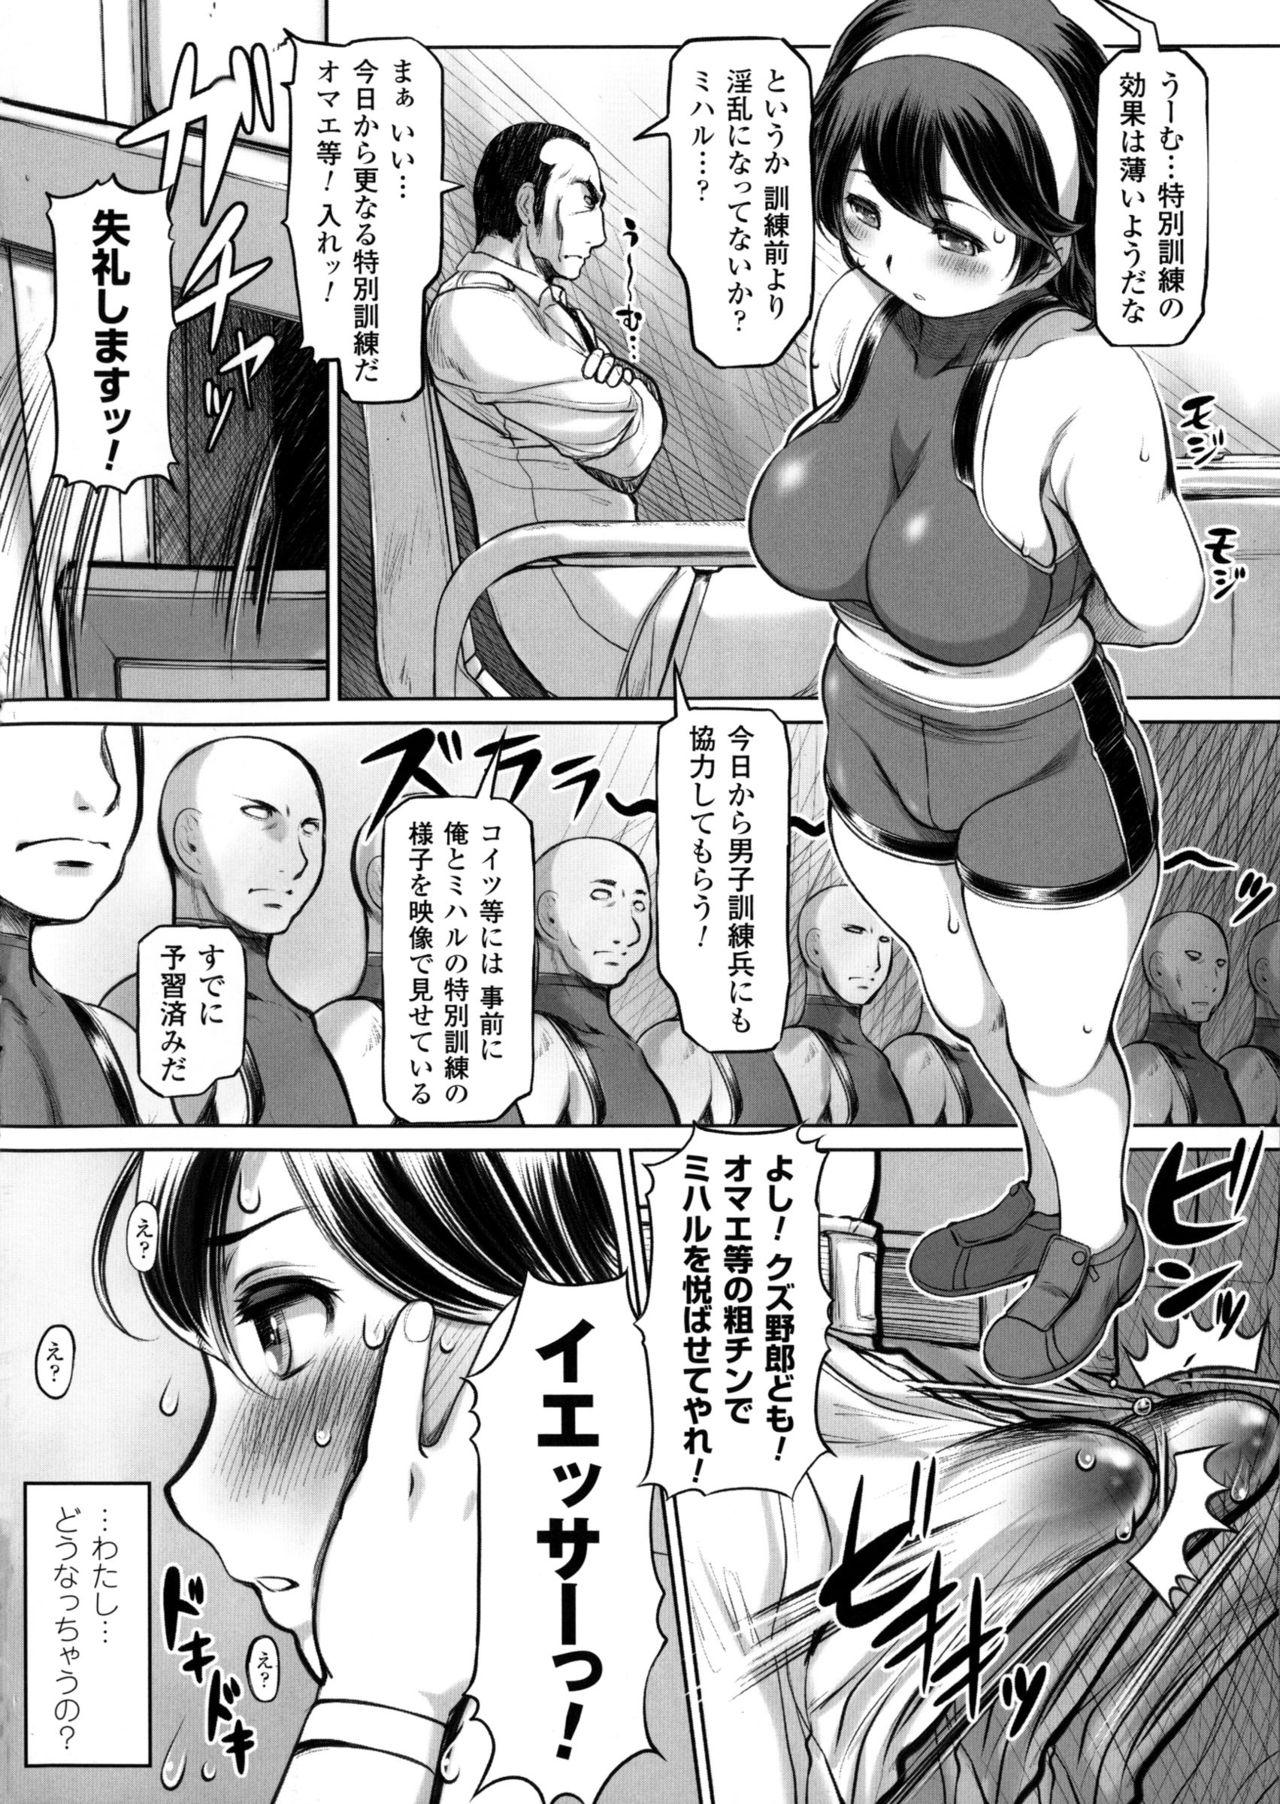 2D Comic Magazine Military Girls Sex Boot Camp e Youkoso! 131